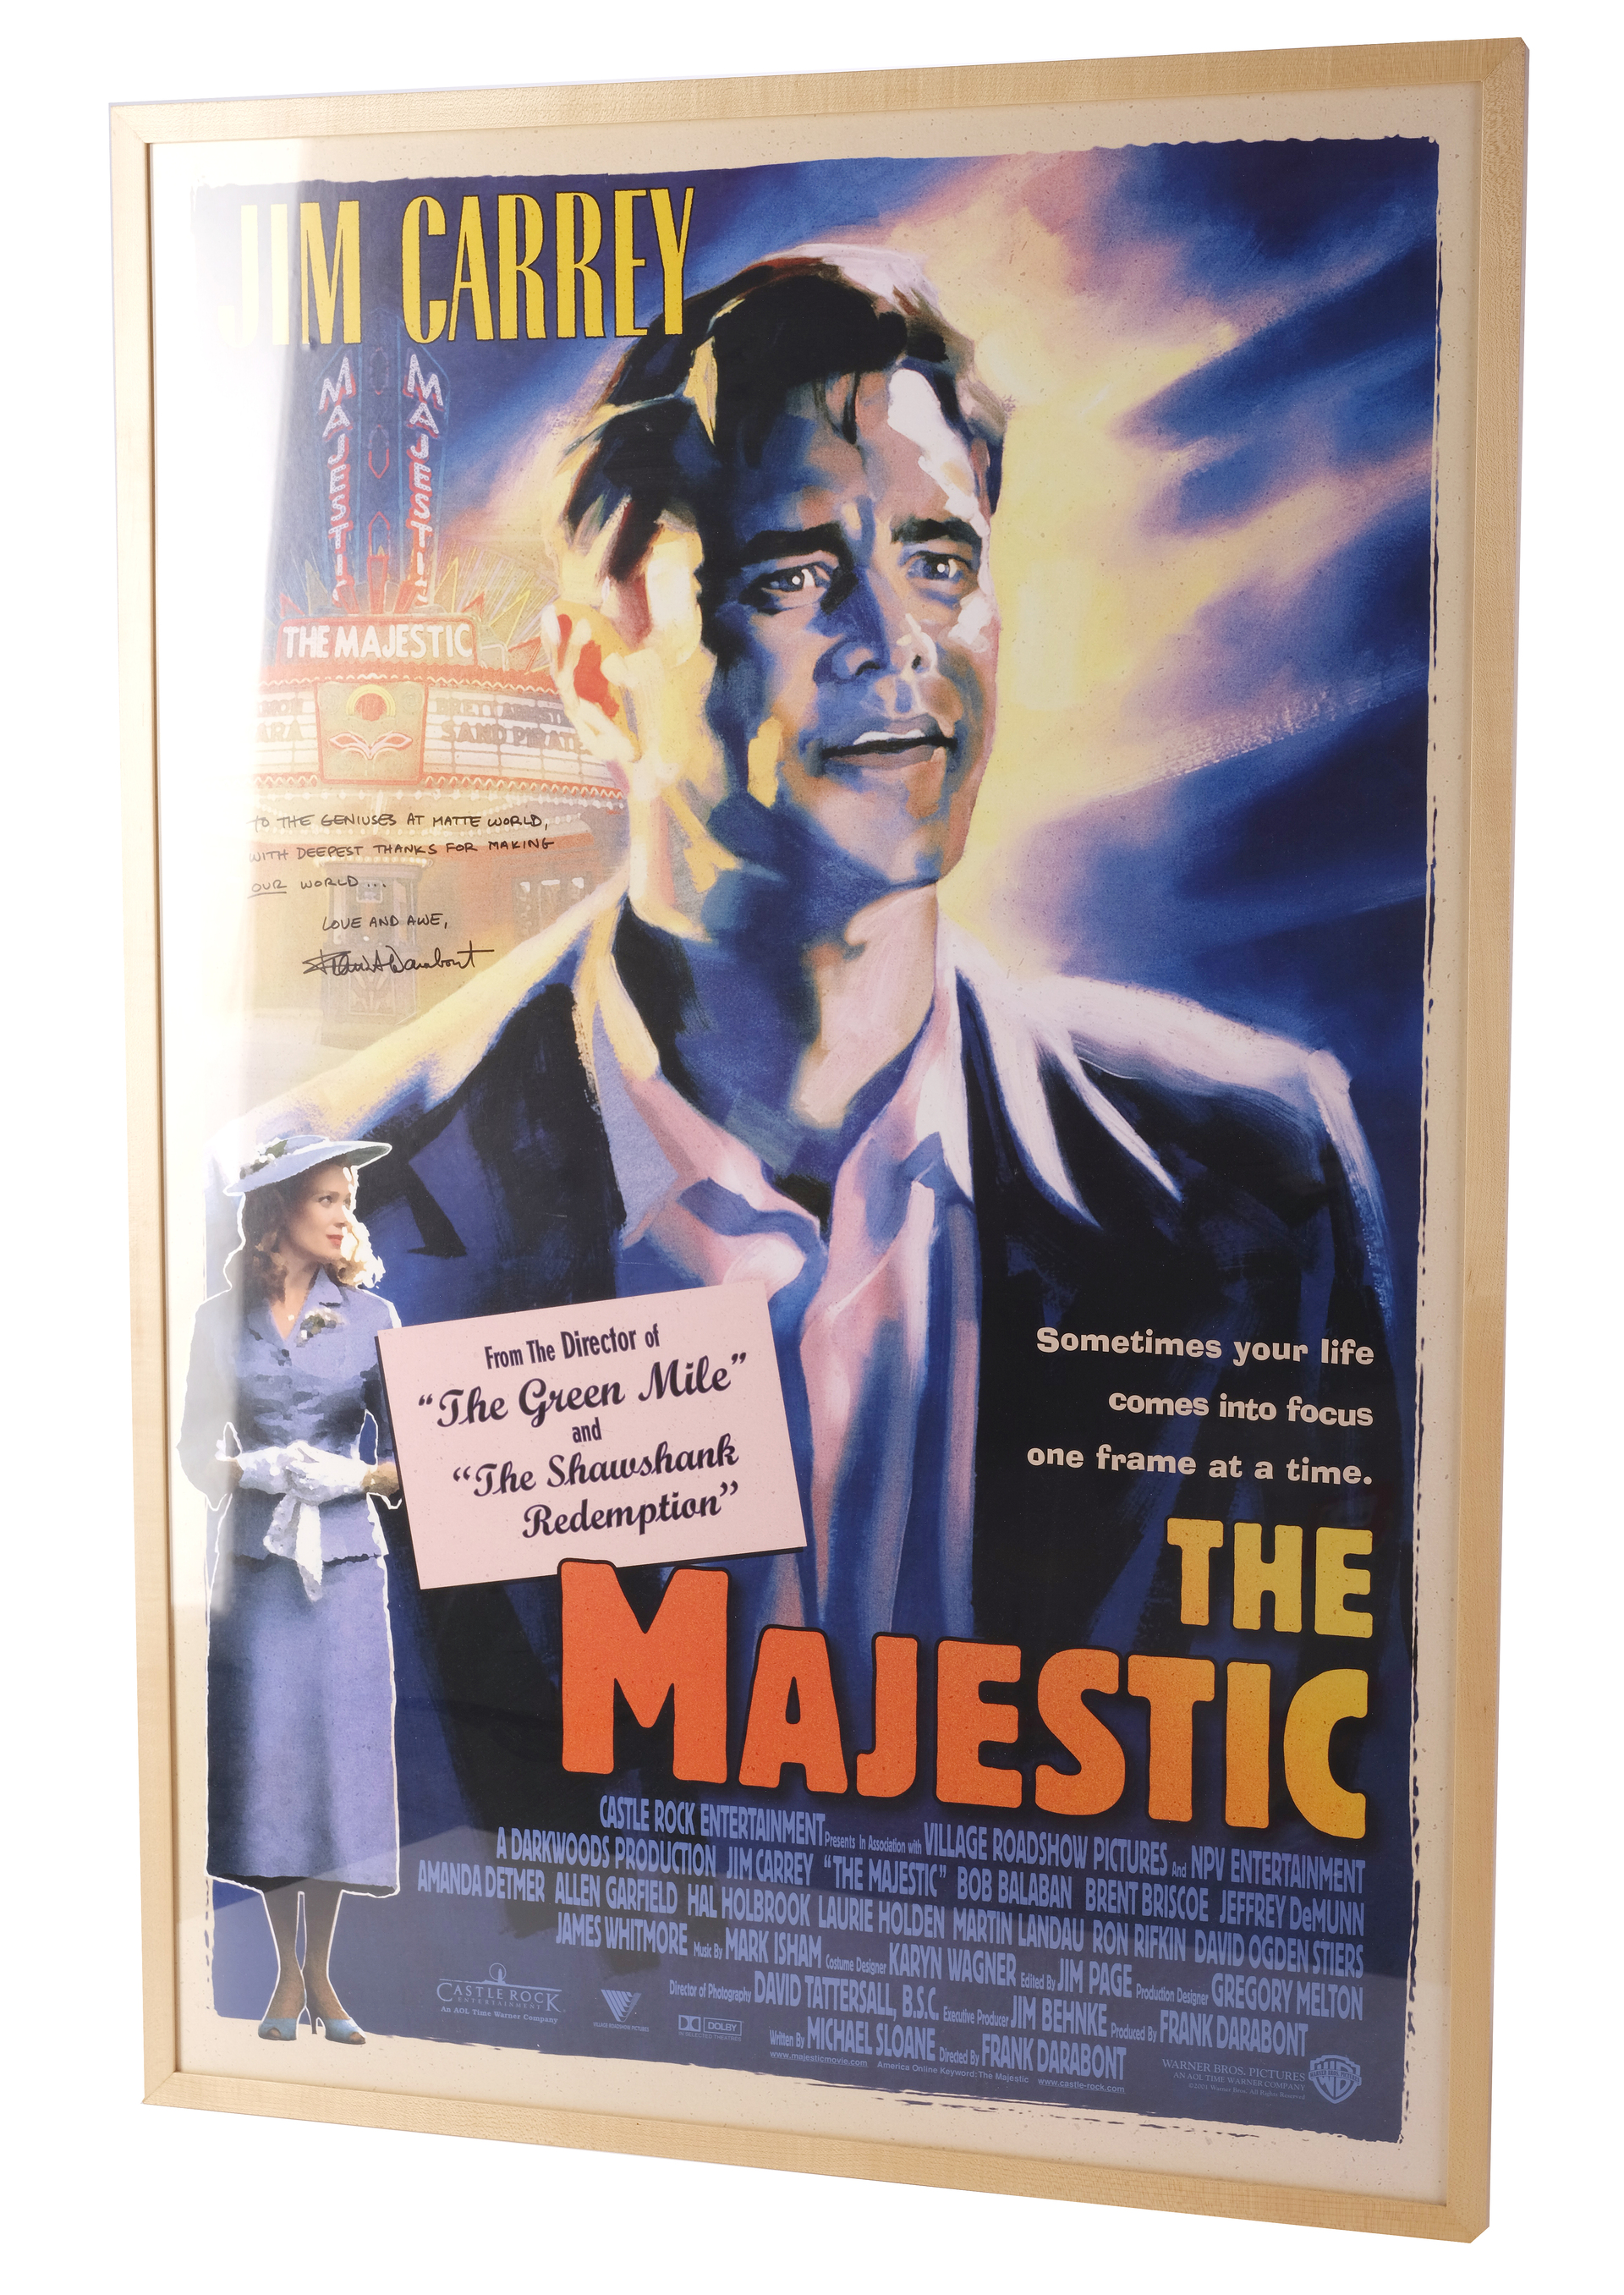 THE MAJESTIC (2001) - Framed Frank Darabont-Autographed One-Sheet - Image 2 of 4